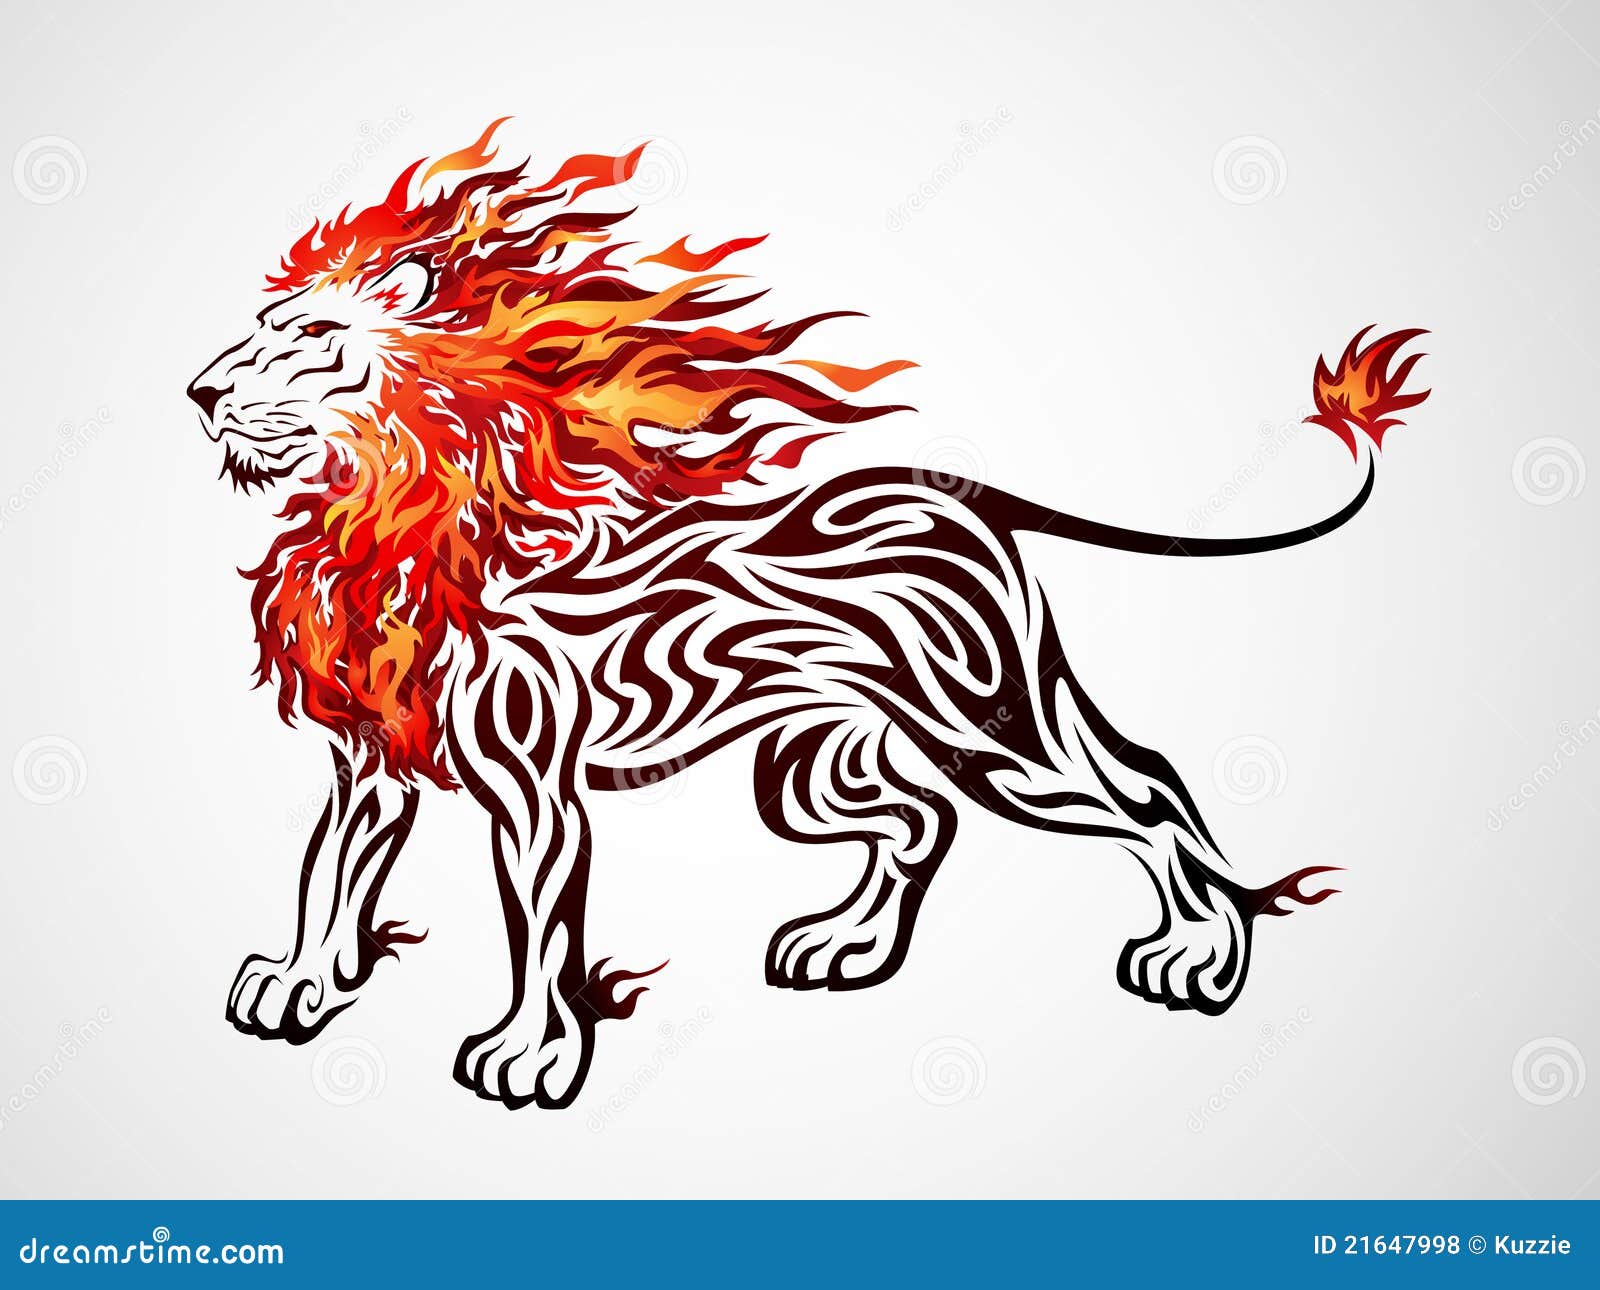 tribal fire lion 21647998